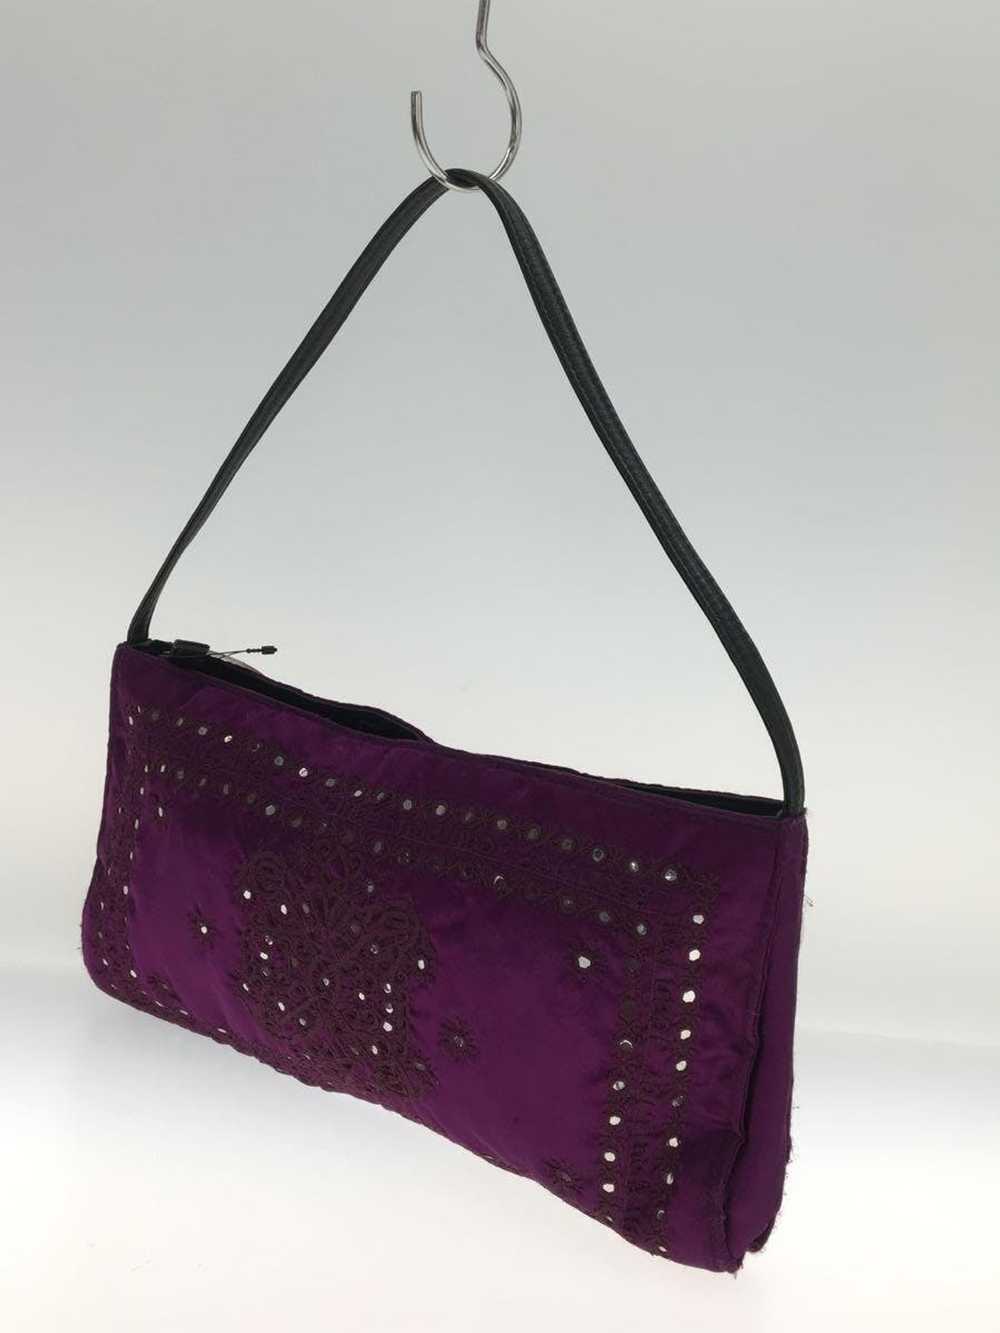 Jean Paul Gaultier Studded Handbag - image 2